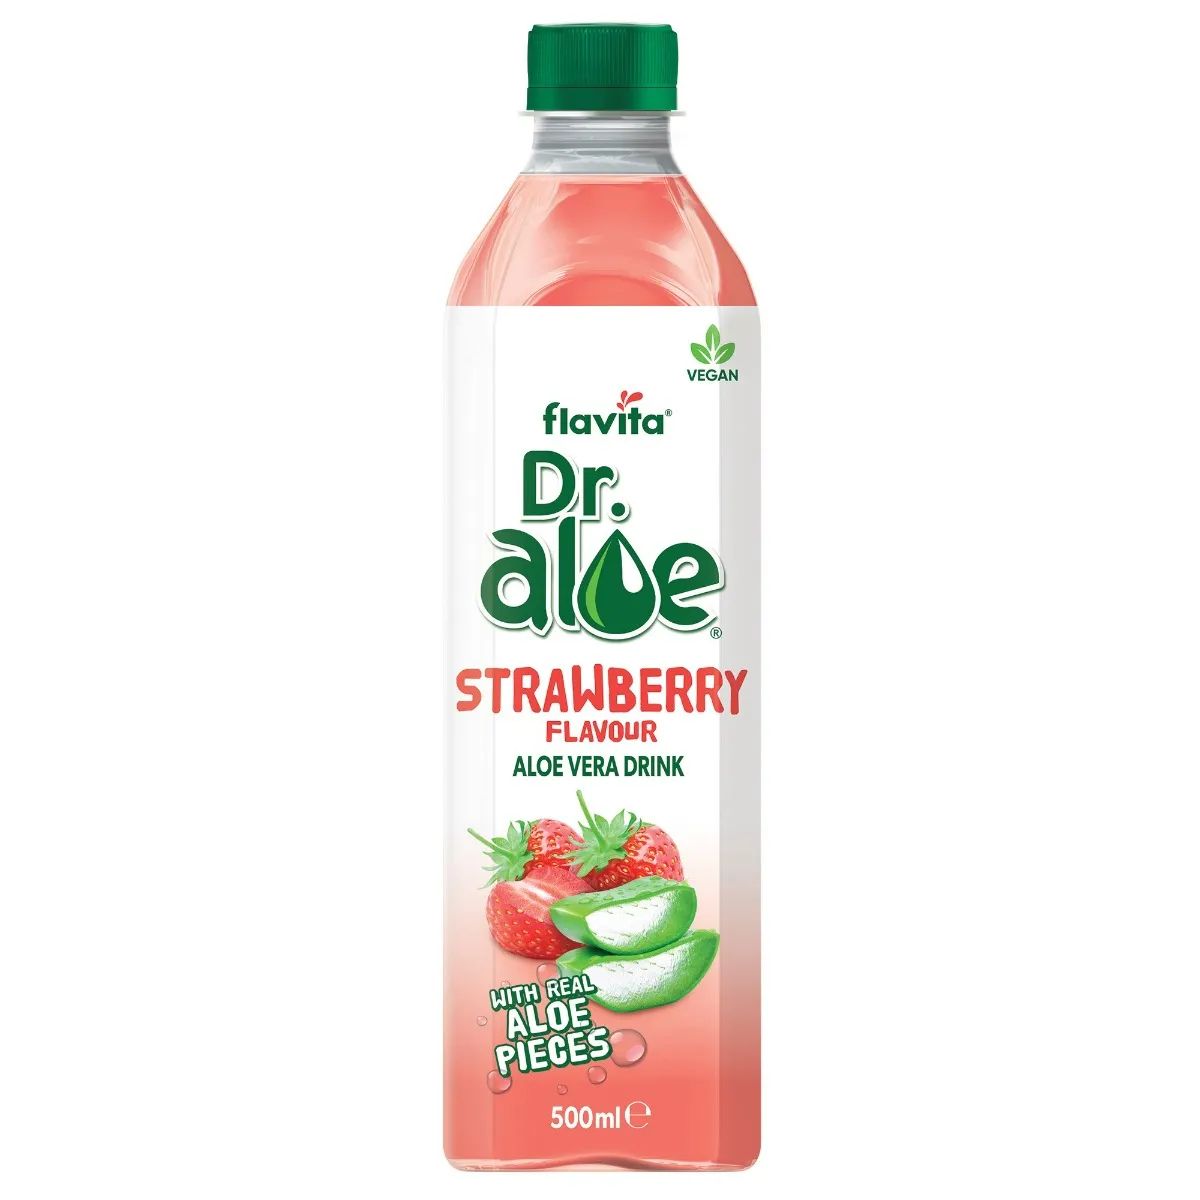 Dr Aloe - Strawberry Flavour - 500ml aloe drink.